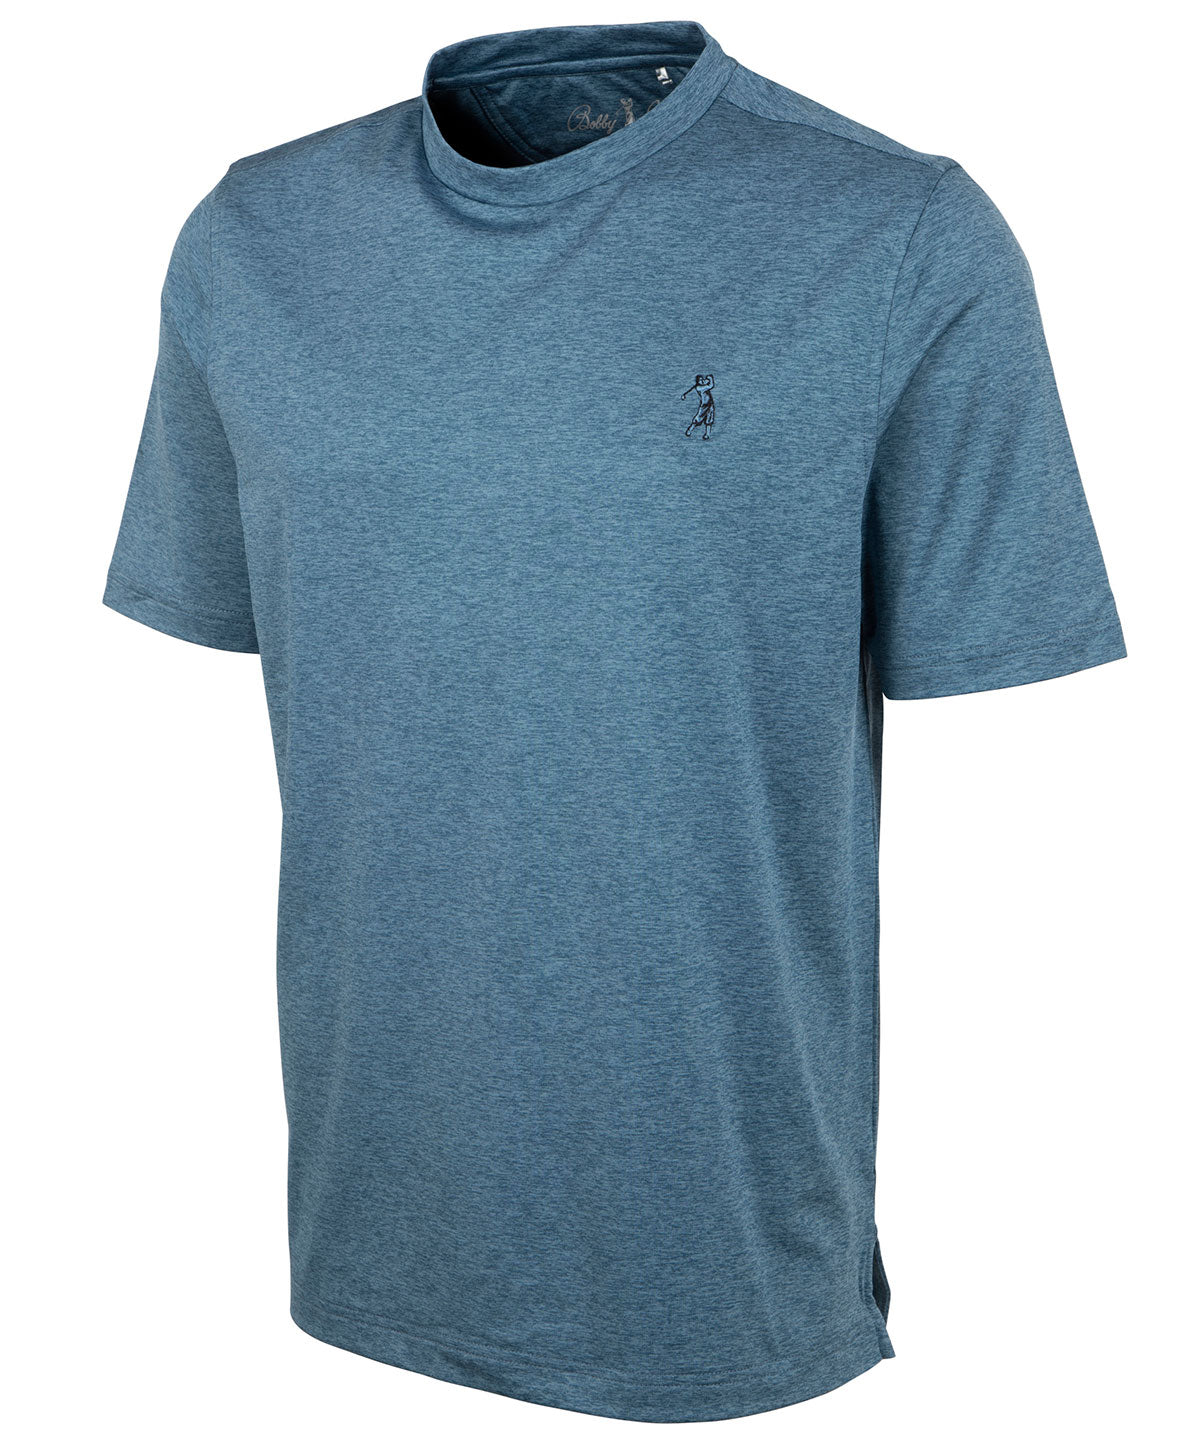 Performance Brushed-Back Stretch Jersey Short-Sleeve Gamer T-Shirt